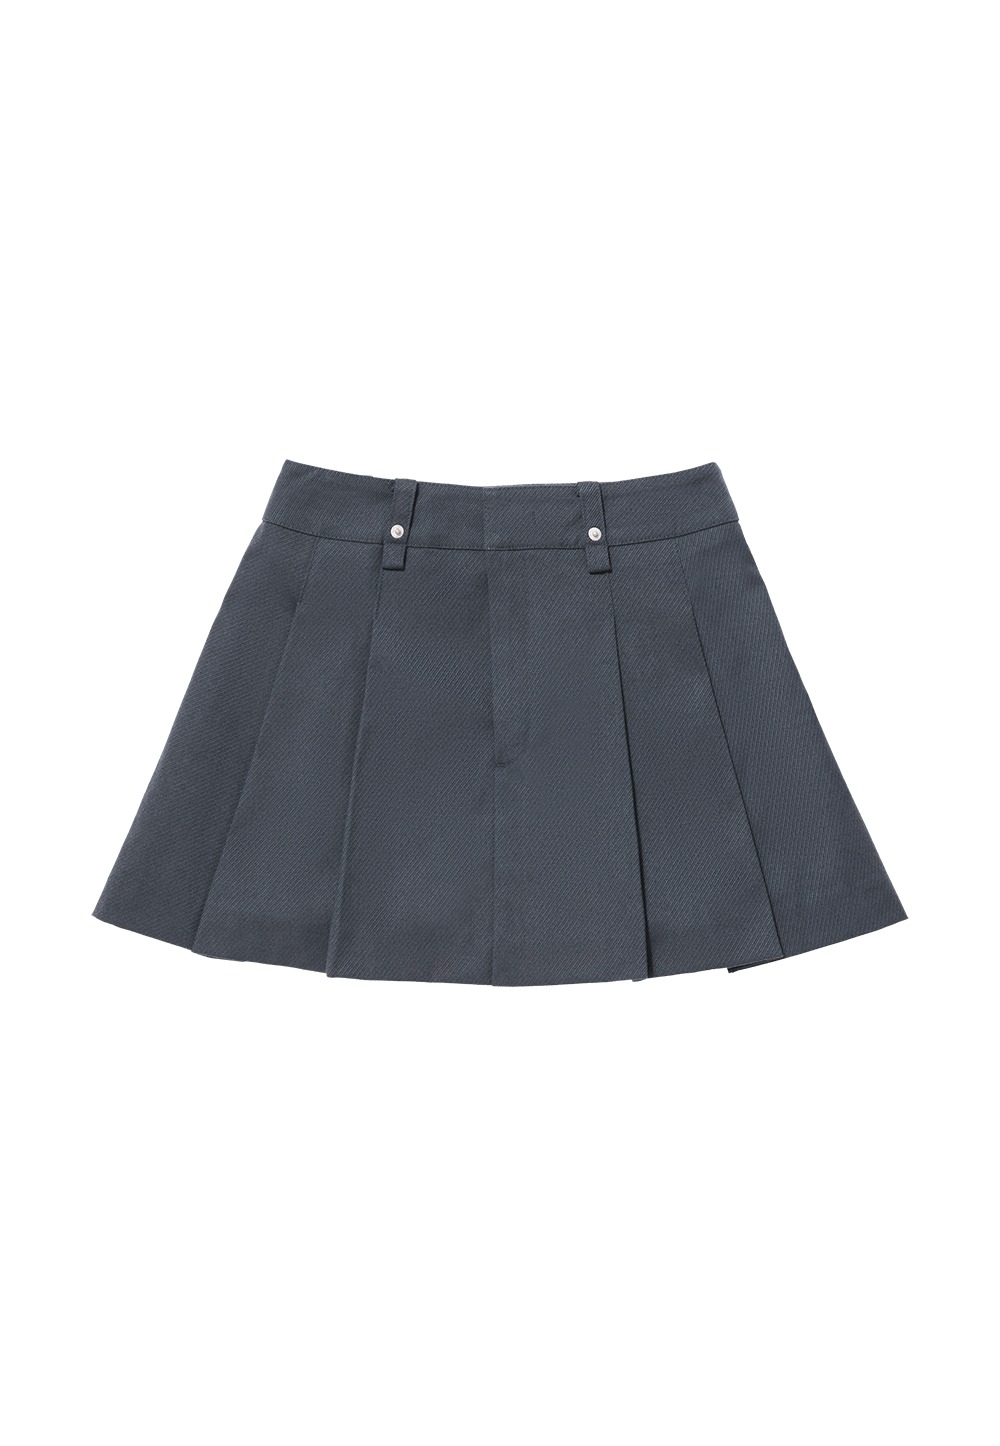 Pleats mini skirt - CHARCOAL GREY